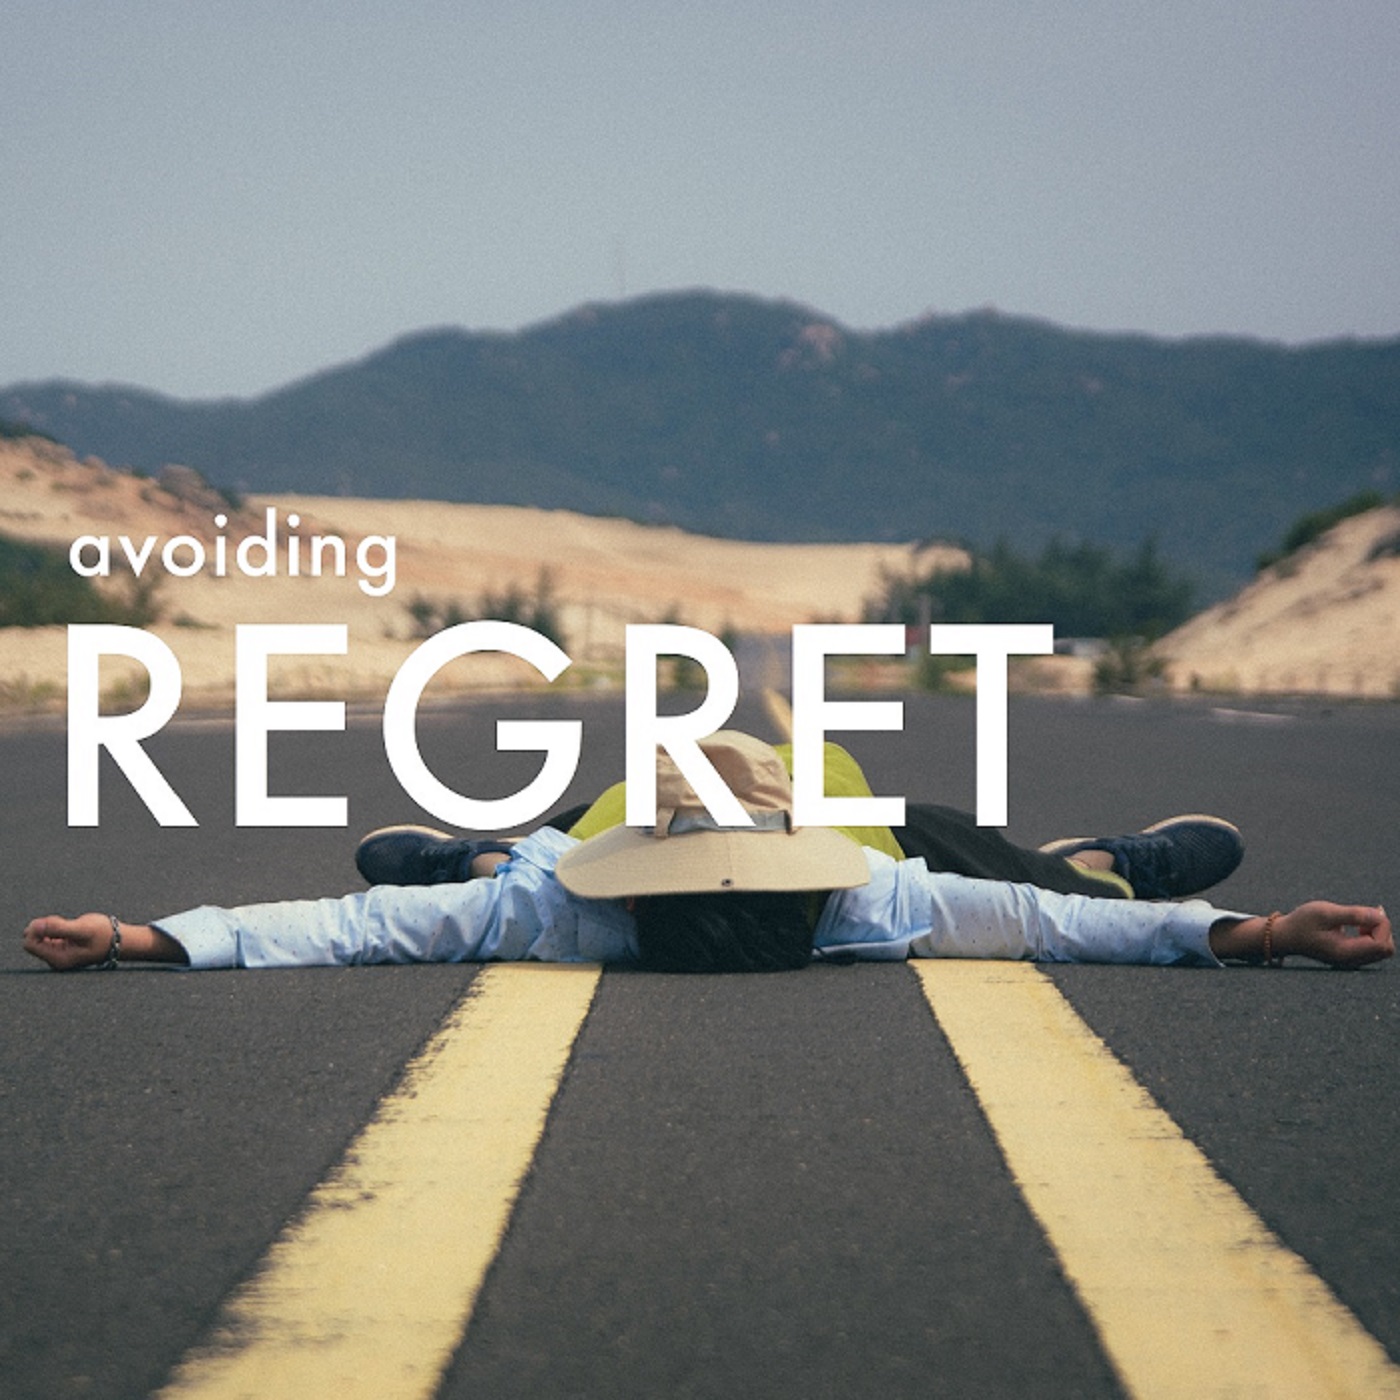 Avoiding Regret: Right Thing, Wrong Way